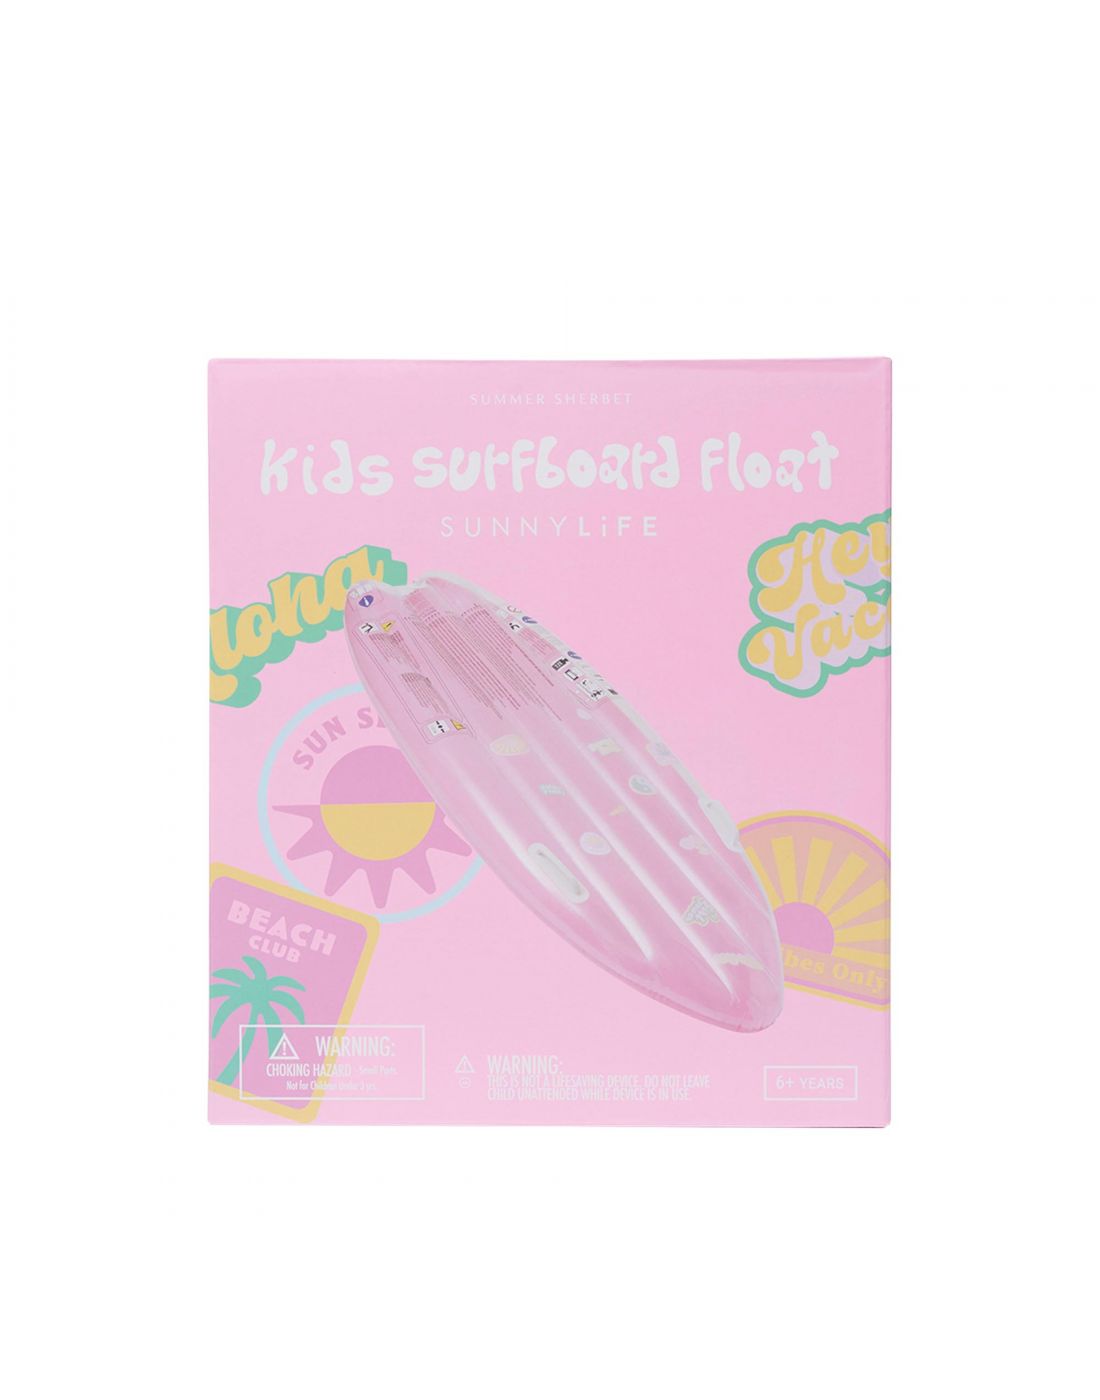 SunnyLife Kids Surfboard Float Summer Sherbet Bubblegum Pink